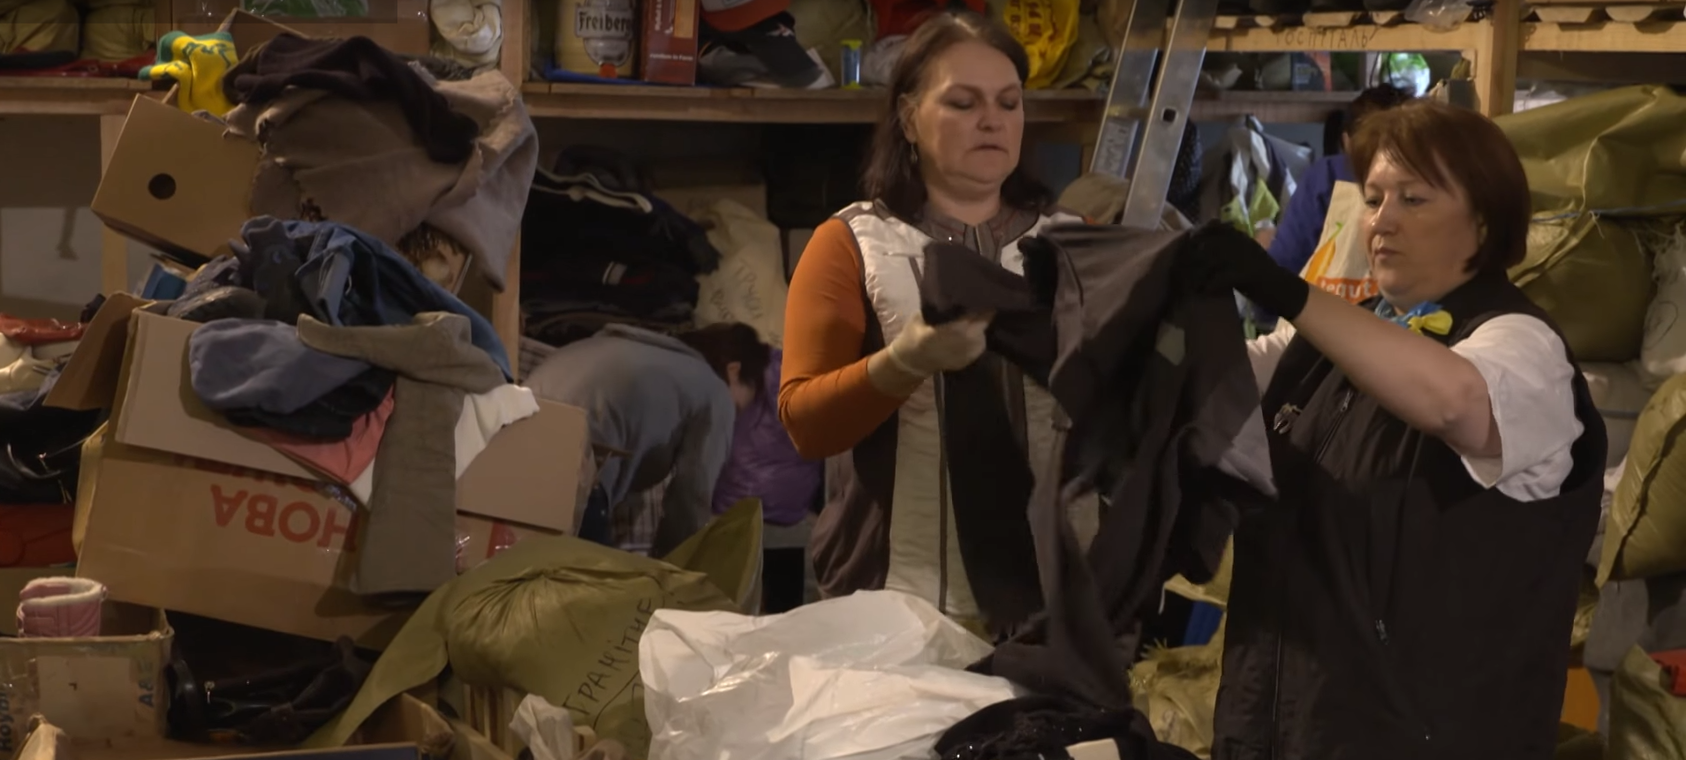 Ukrainian volunteers sort donated goods for displaced citizens. (Photo: UNHCR video screenshot)  